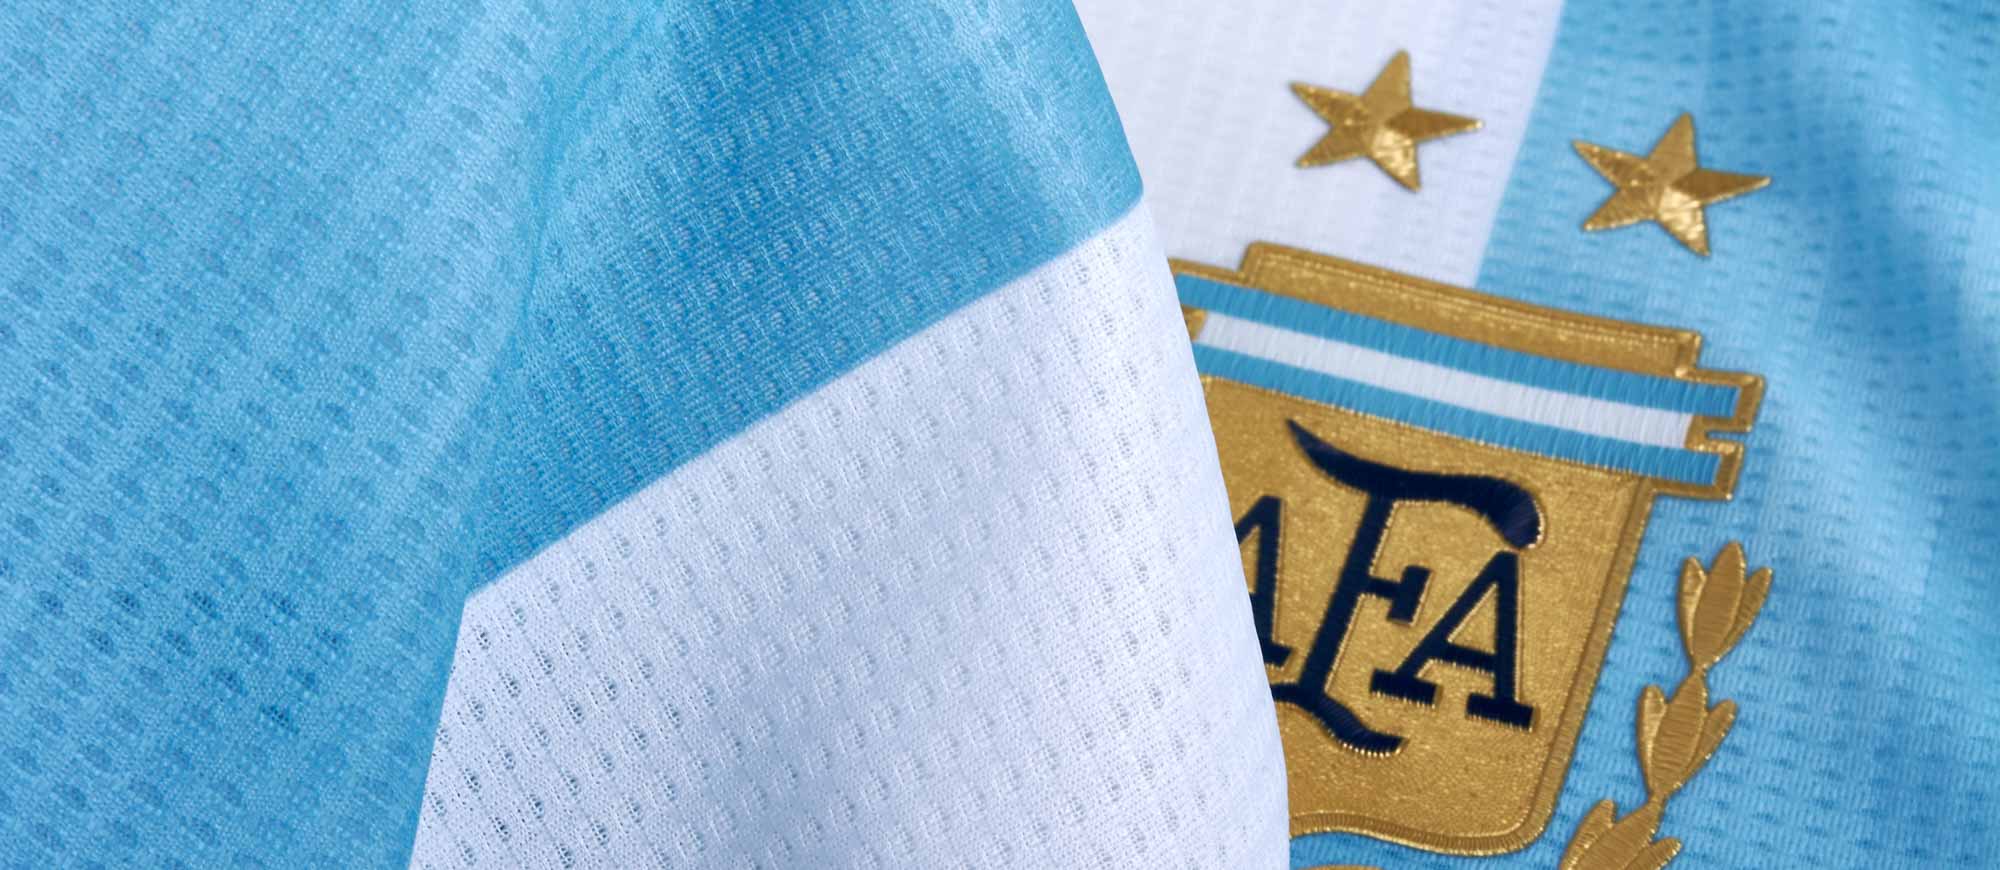 authentic argentina jersey